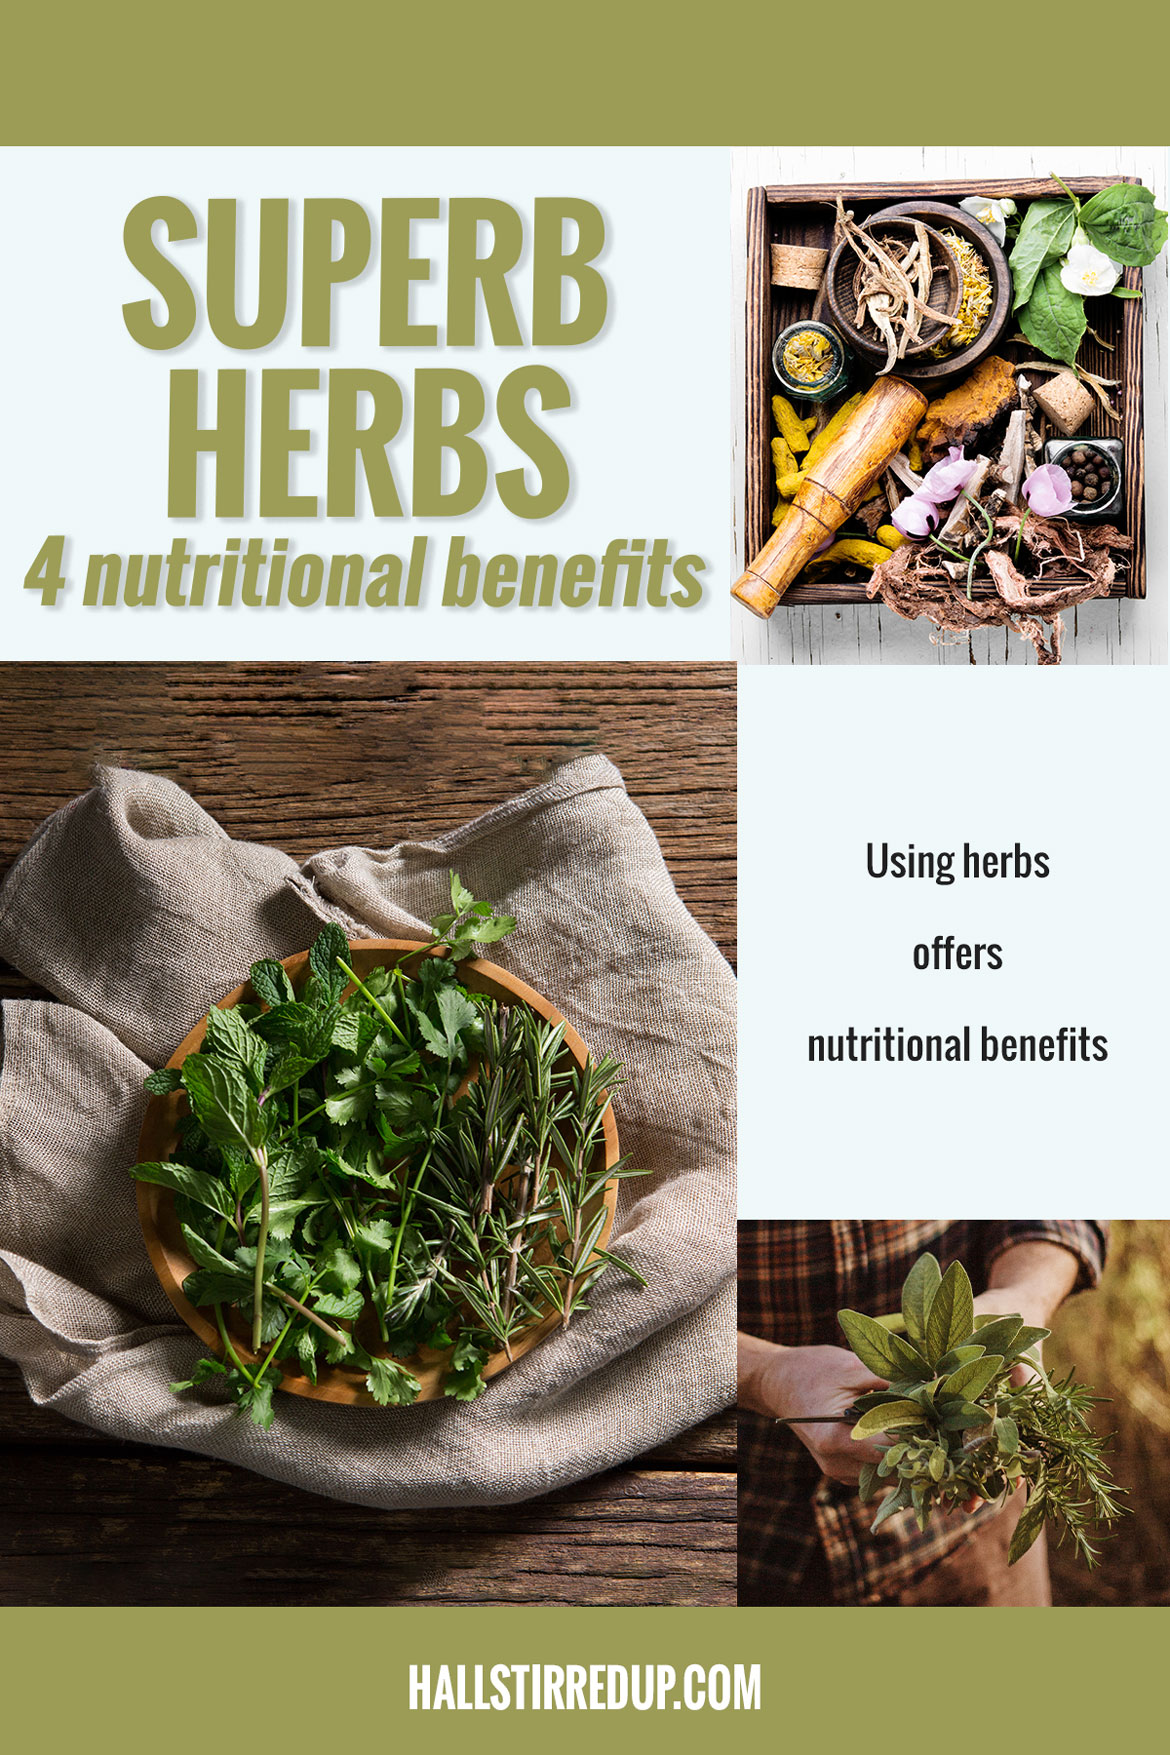 Superb Herbs 4 key nutritional benefits